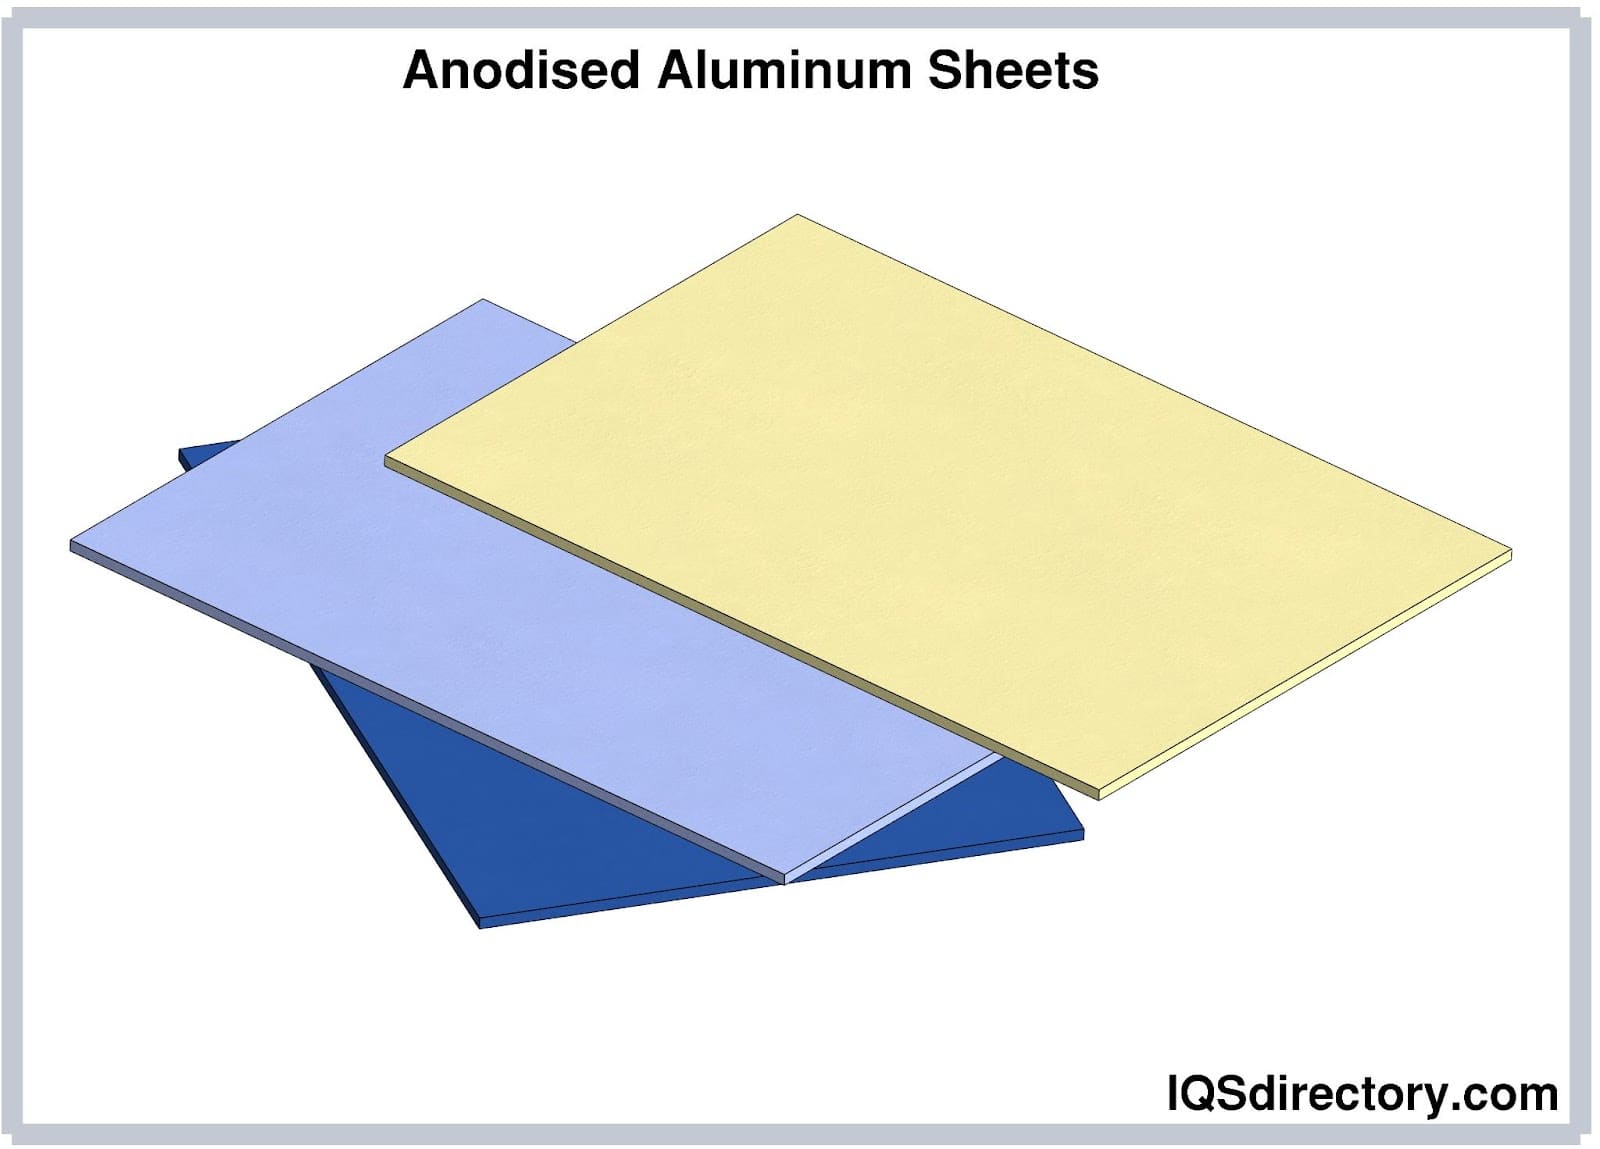 Anodised Aluminum Sheets